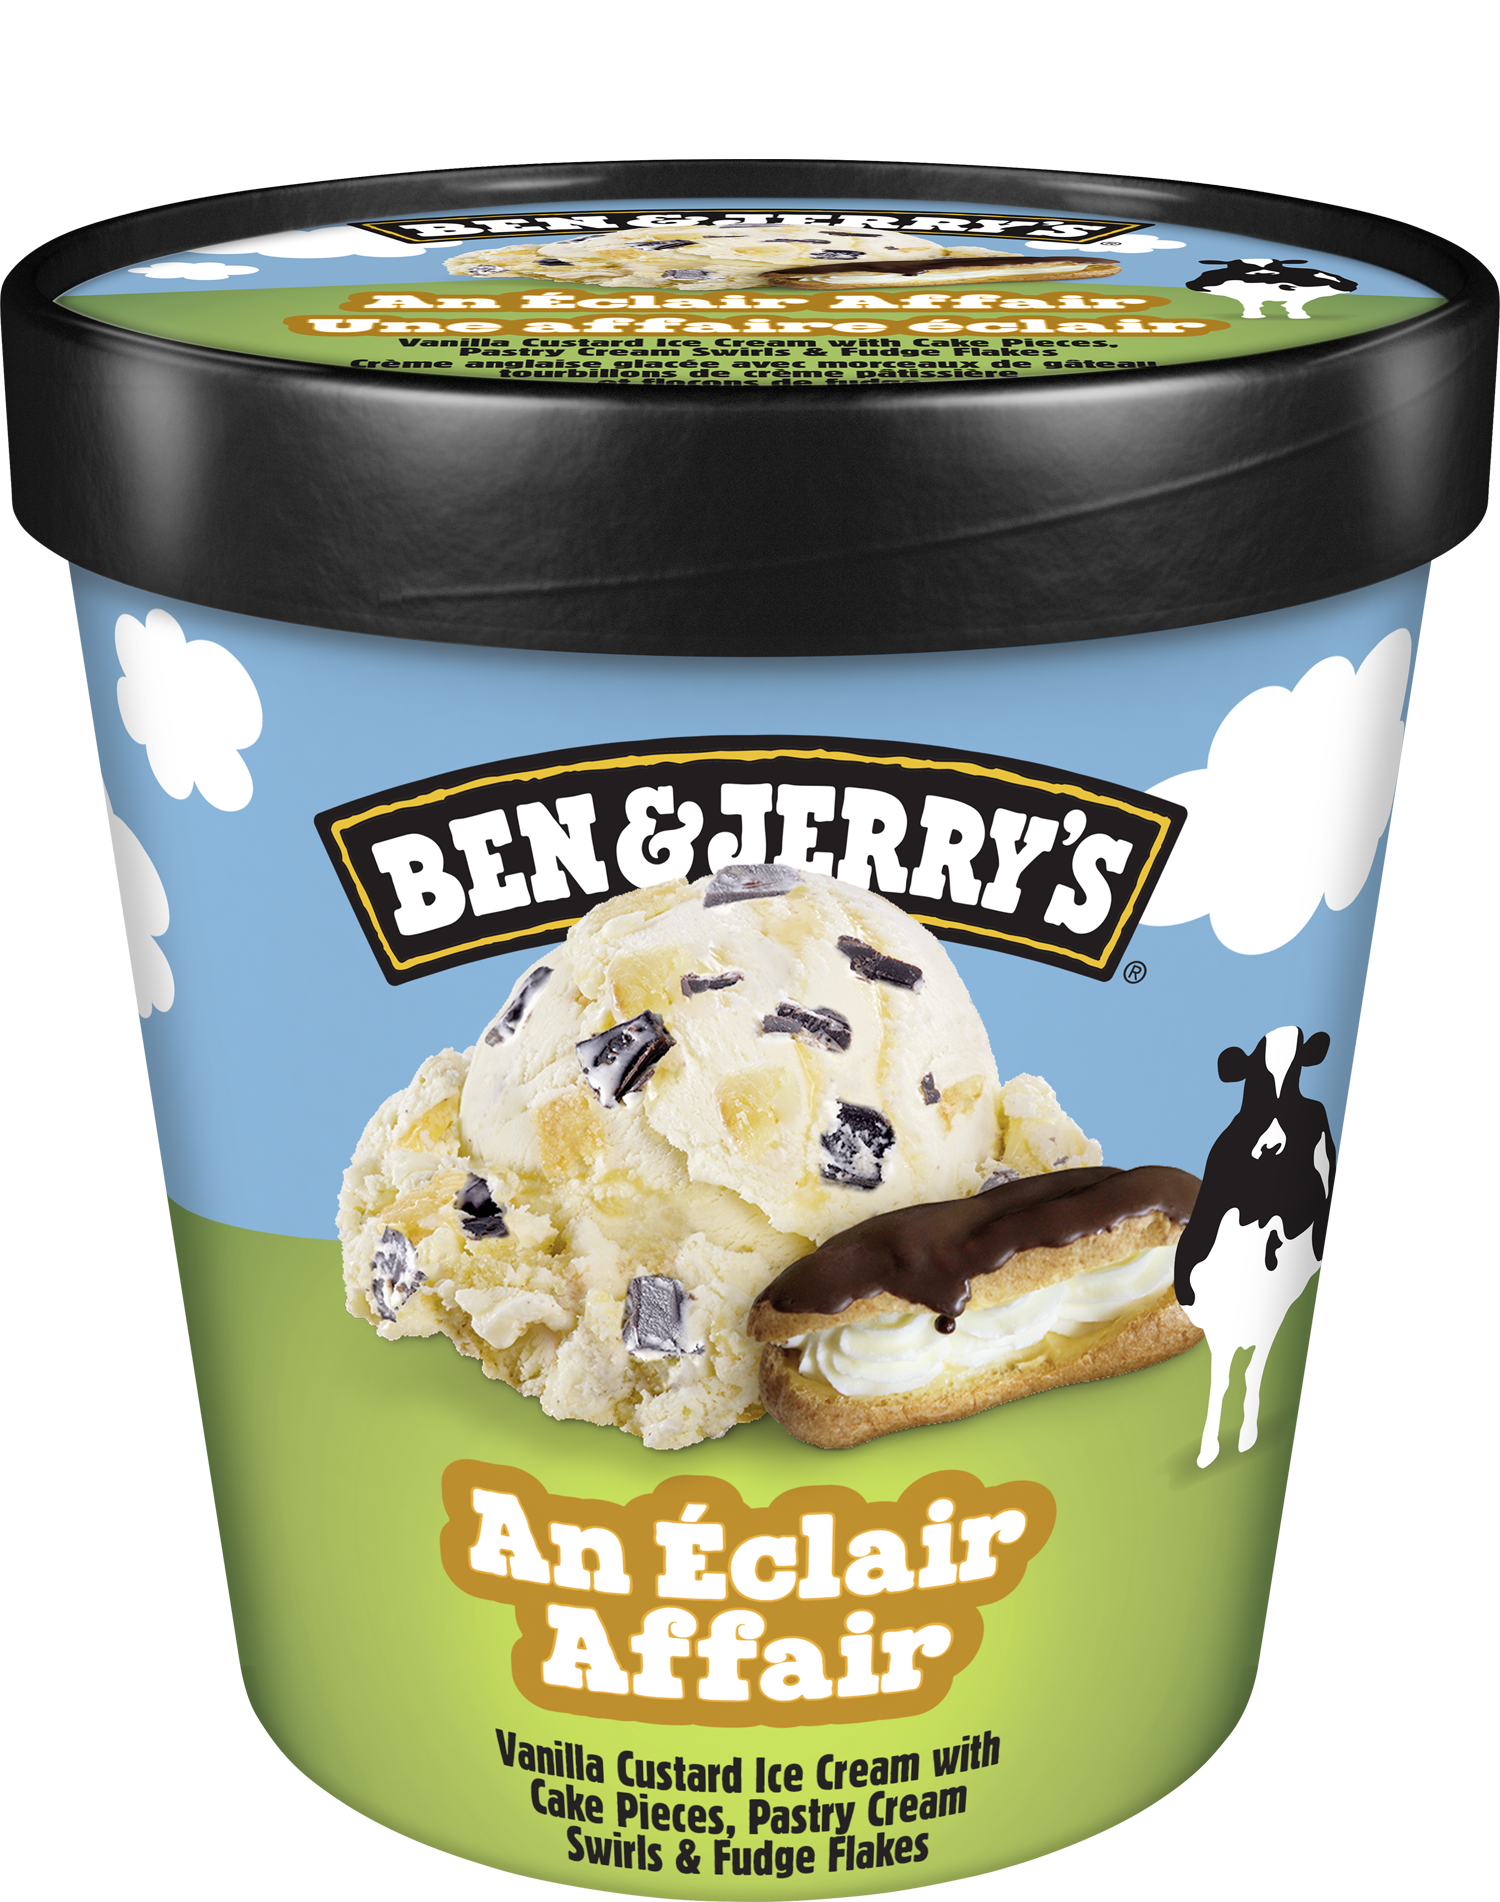 An Éclair Affair Original Ice Cream Pints